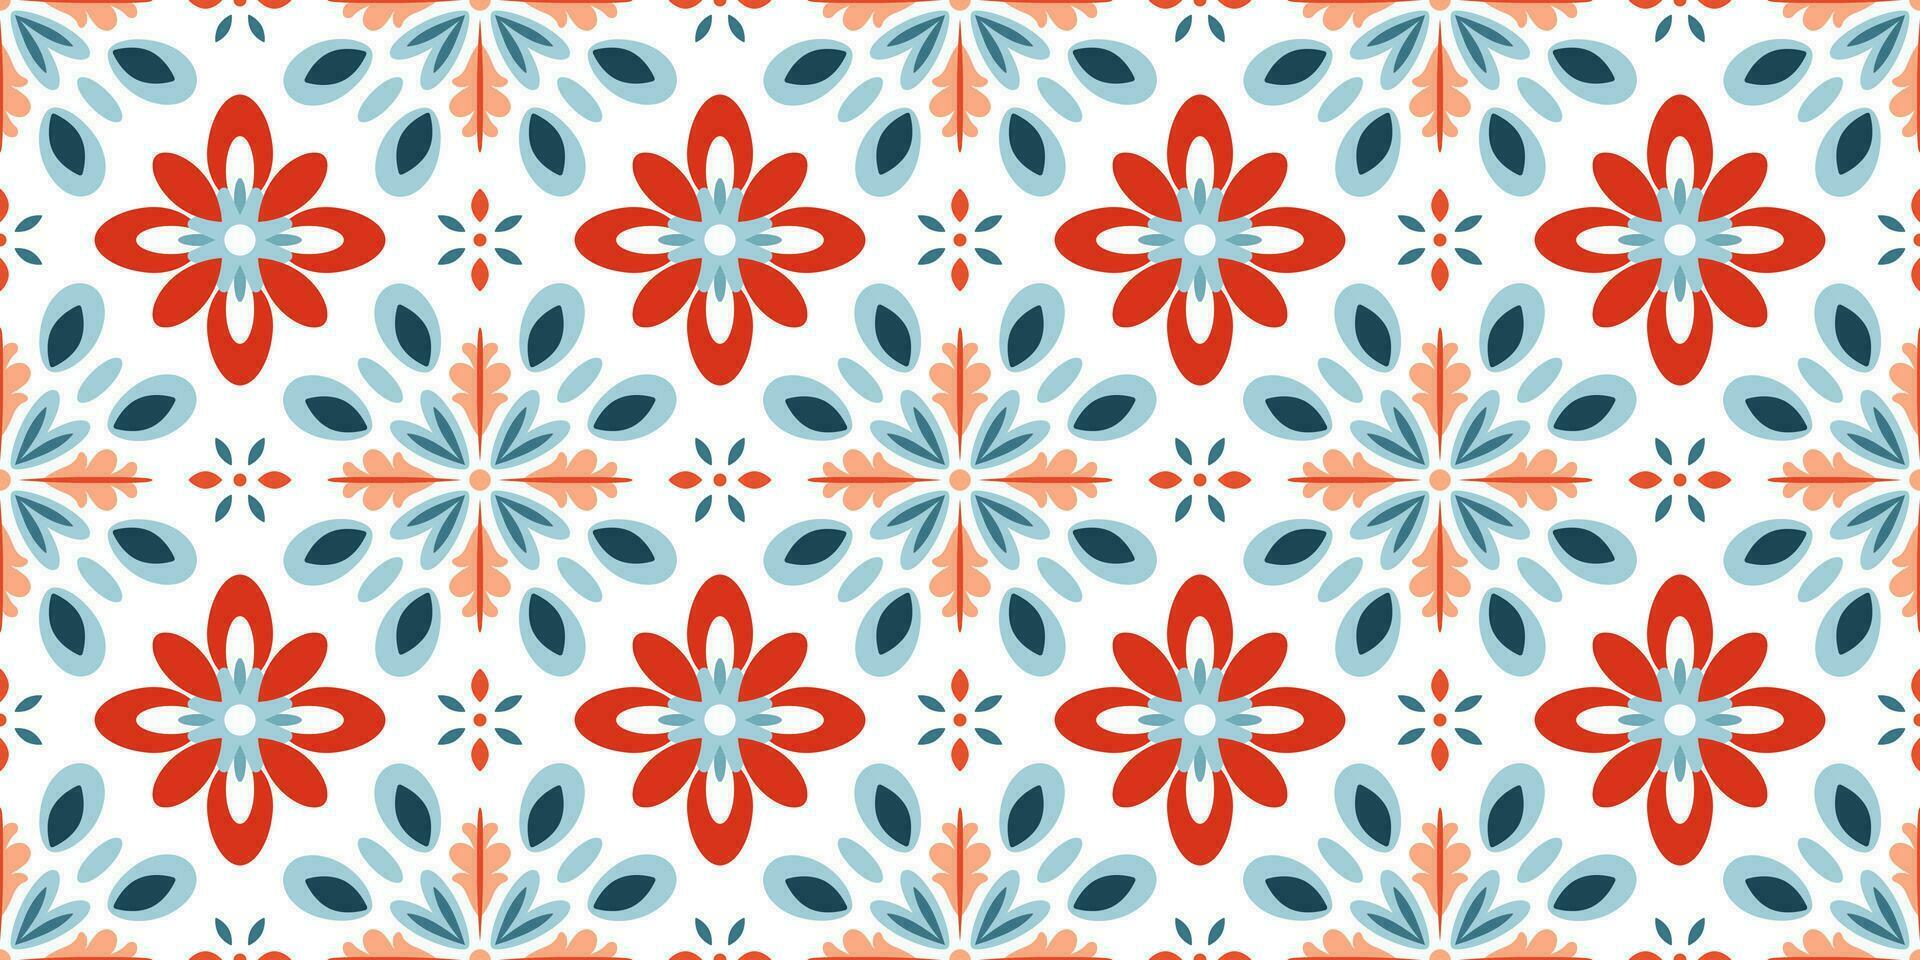 Scandinavian Style Tile. Ethnic Vector Seamless Floral Pattern.